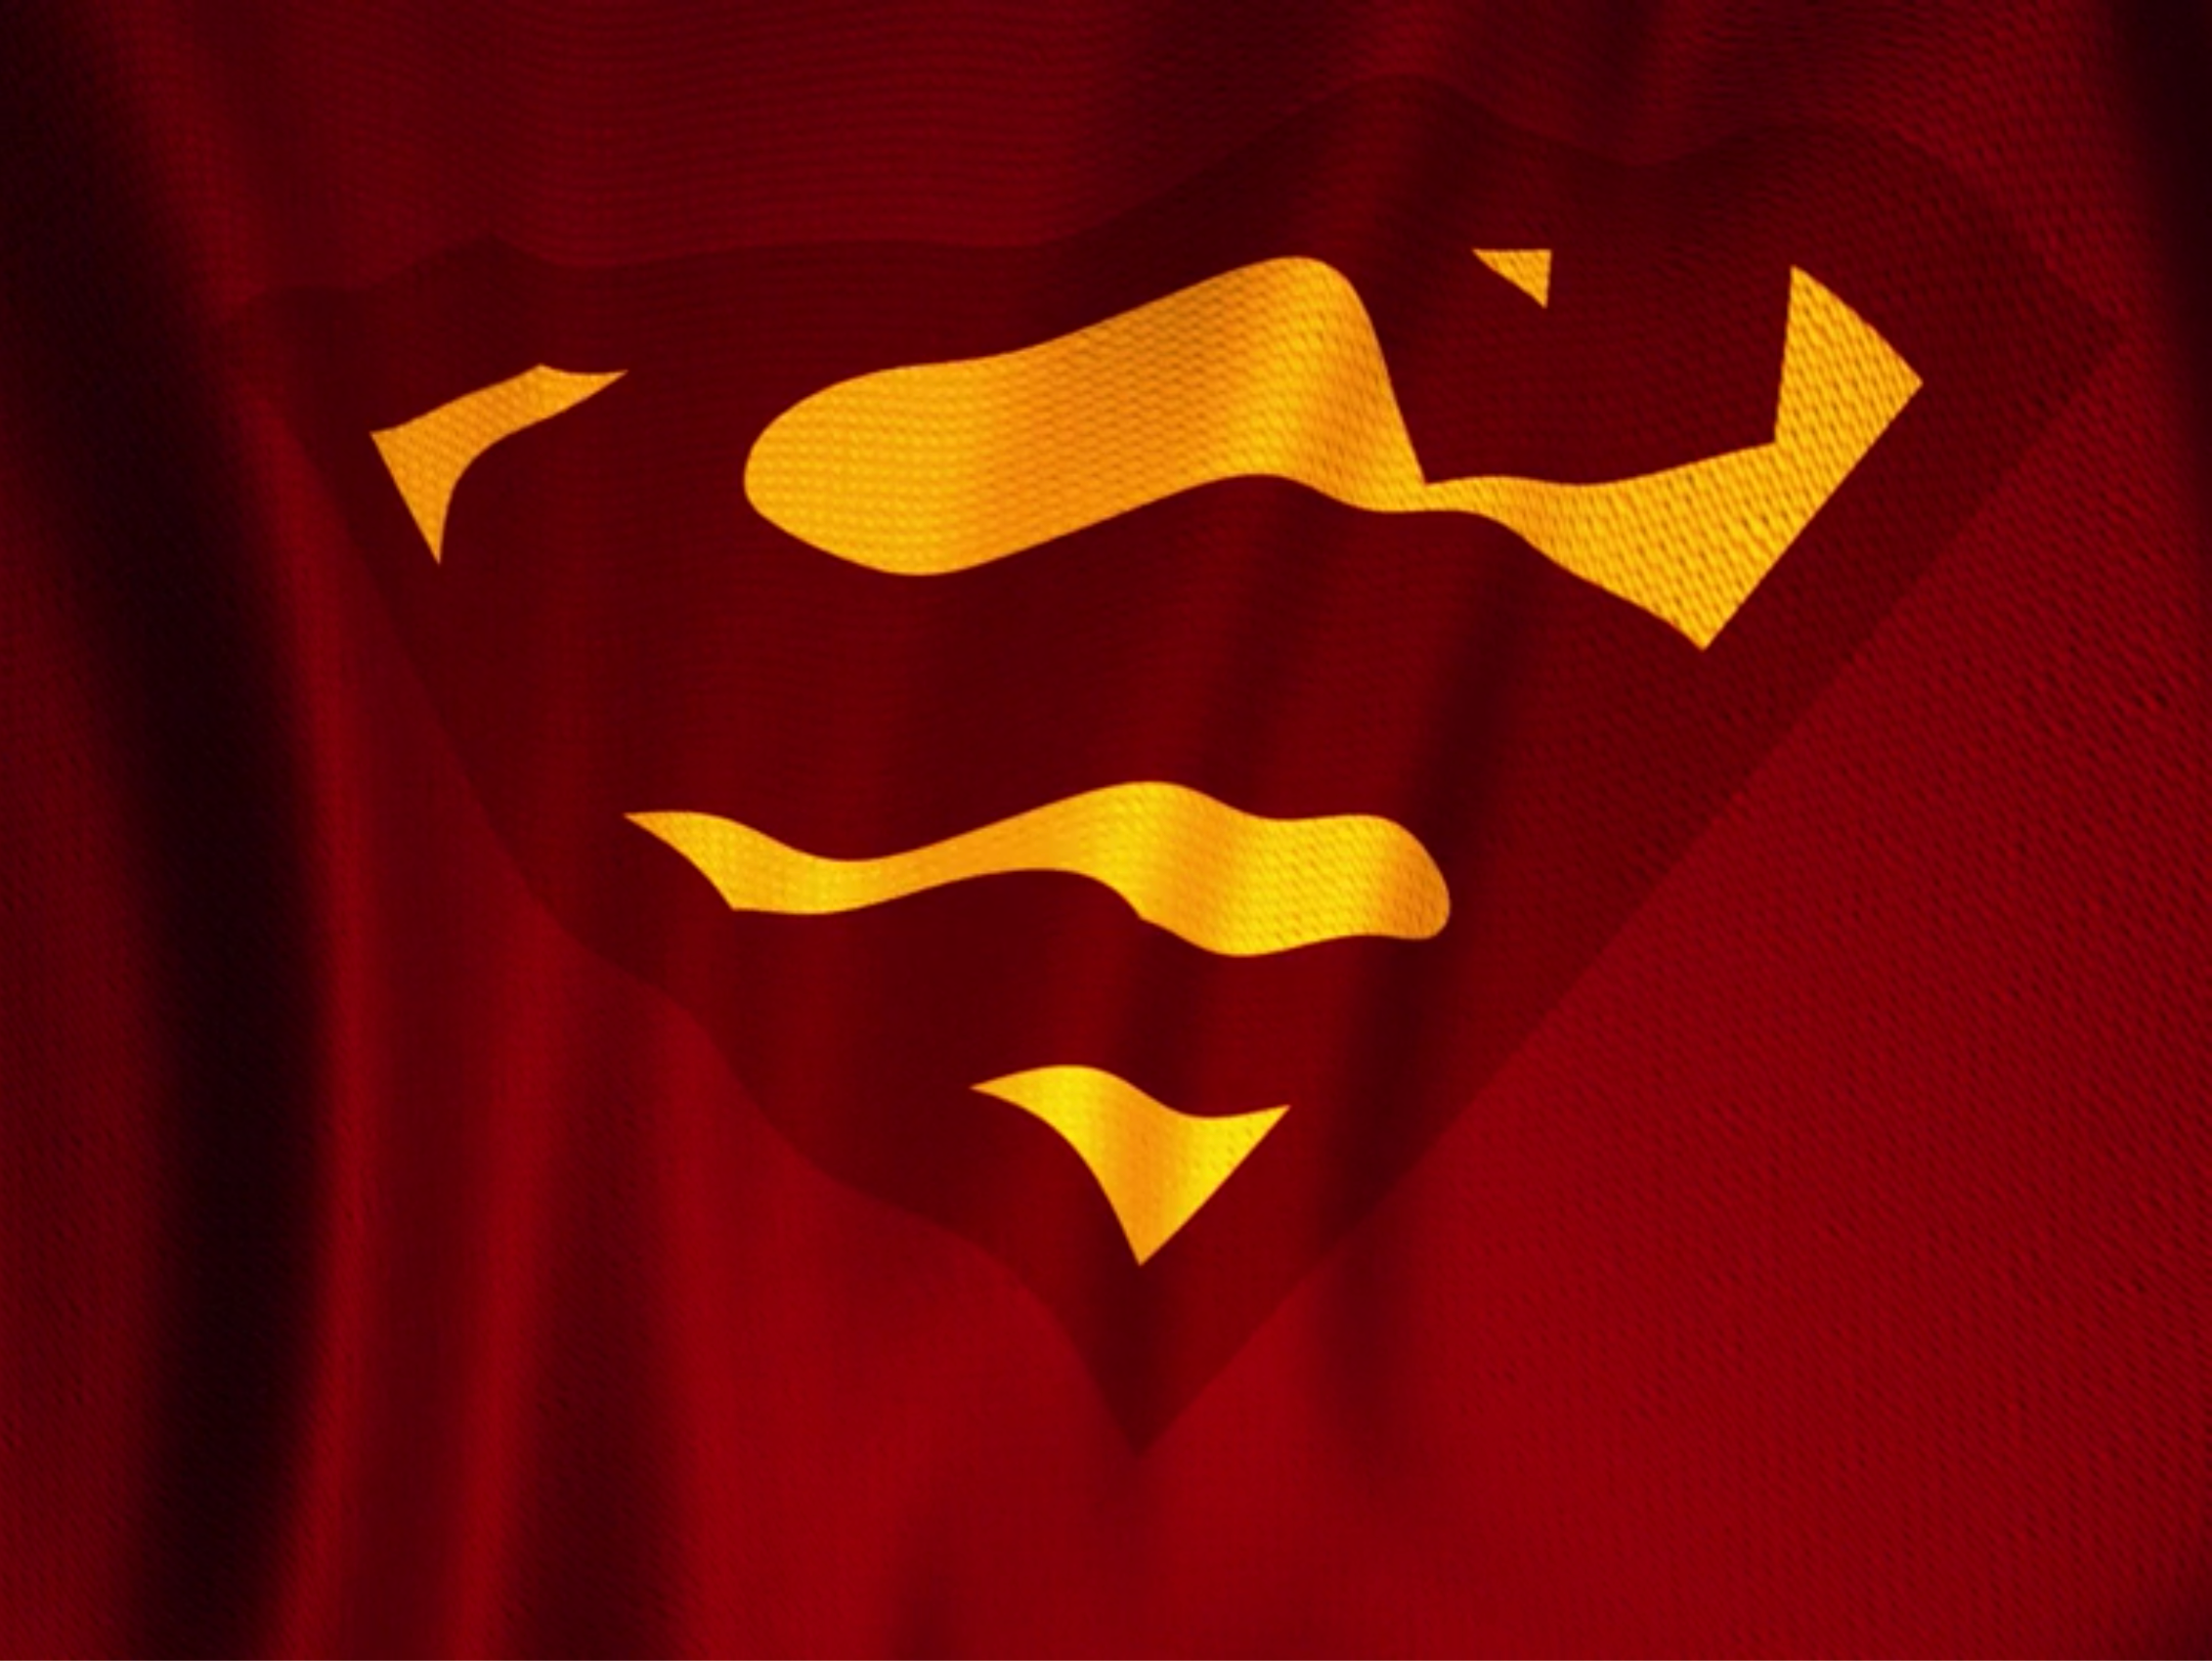 Superman’s cape in HD